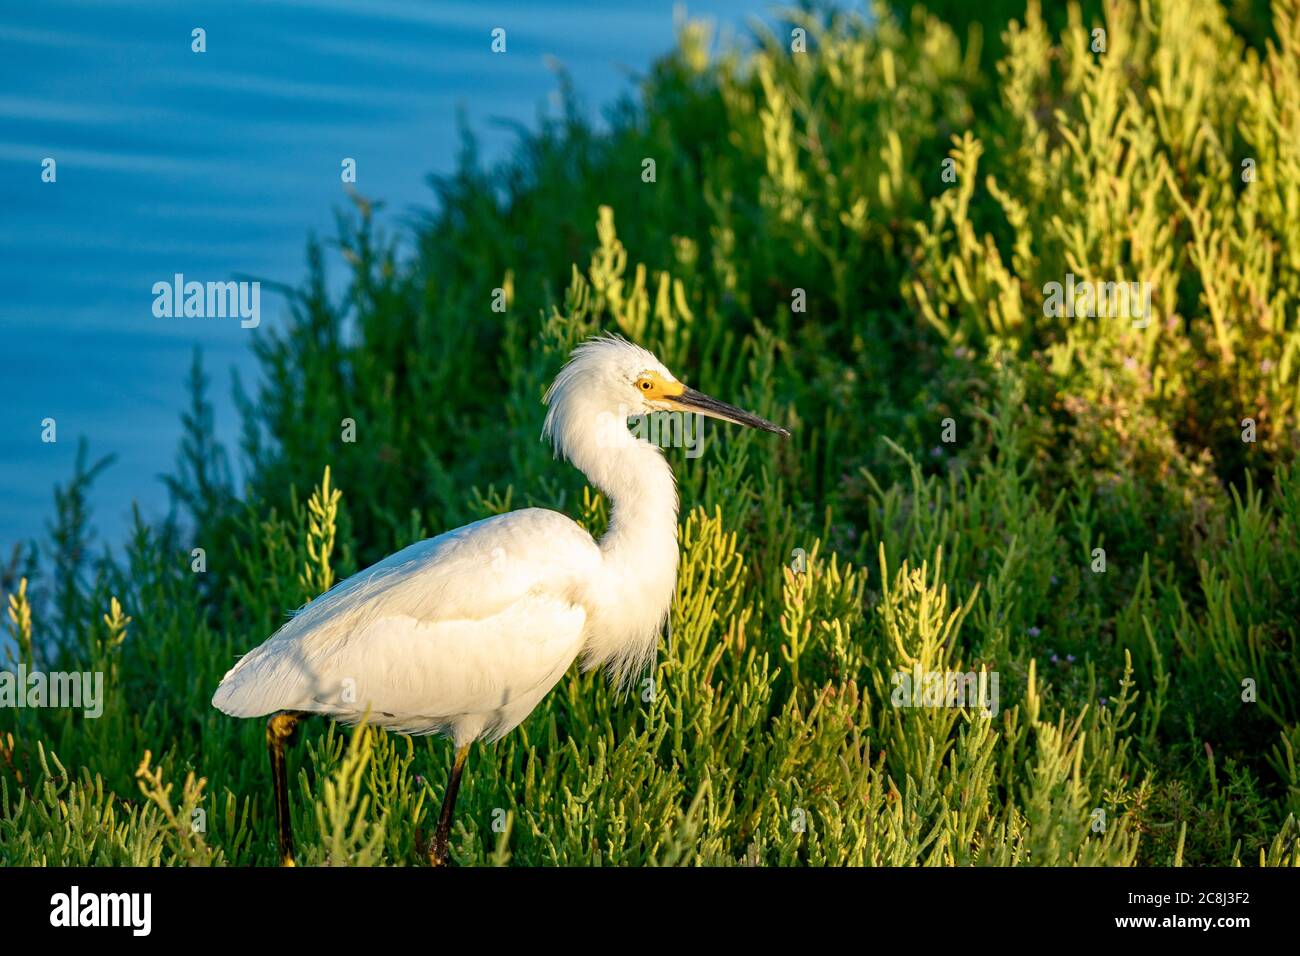 Snowy egret in the marshland Stock Photo